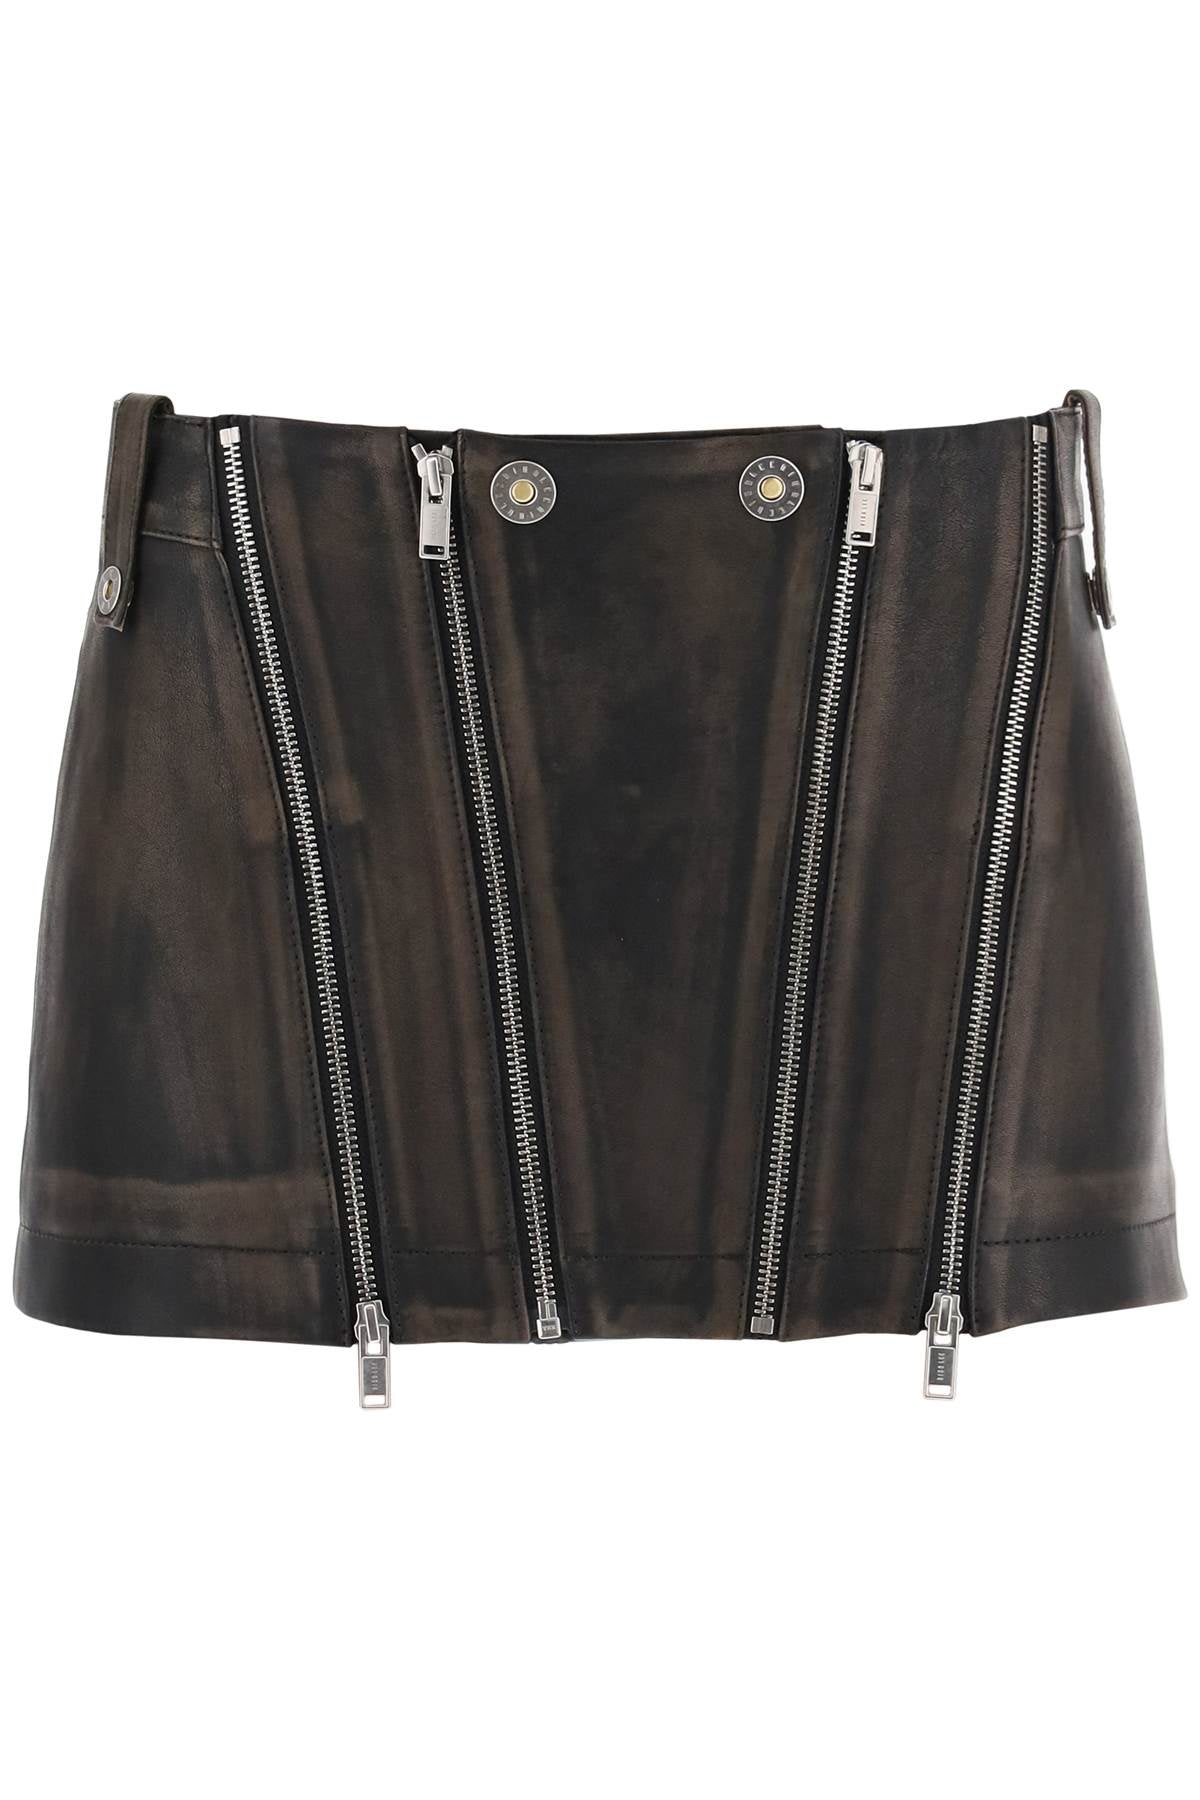 Dion lee leather biker micro skirt-0